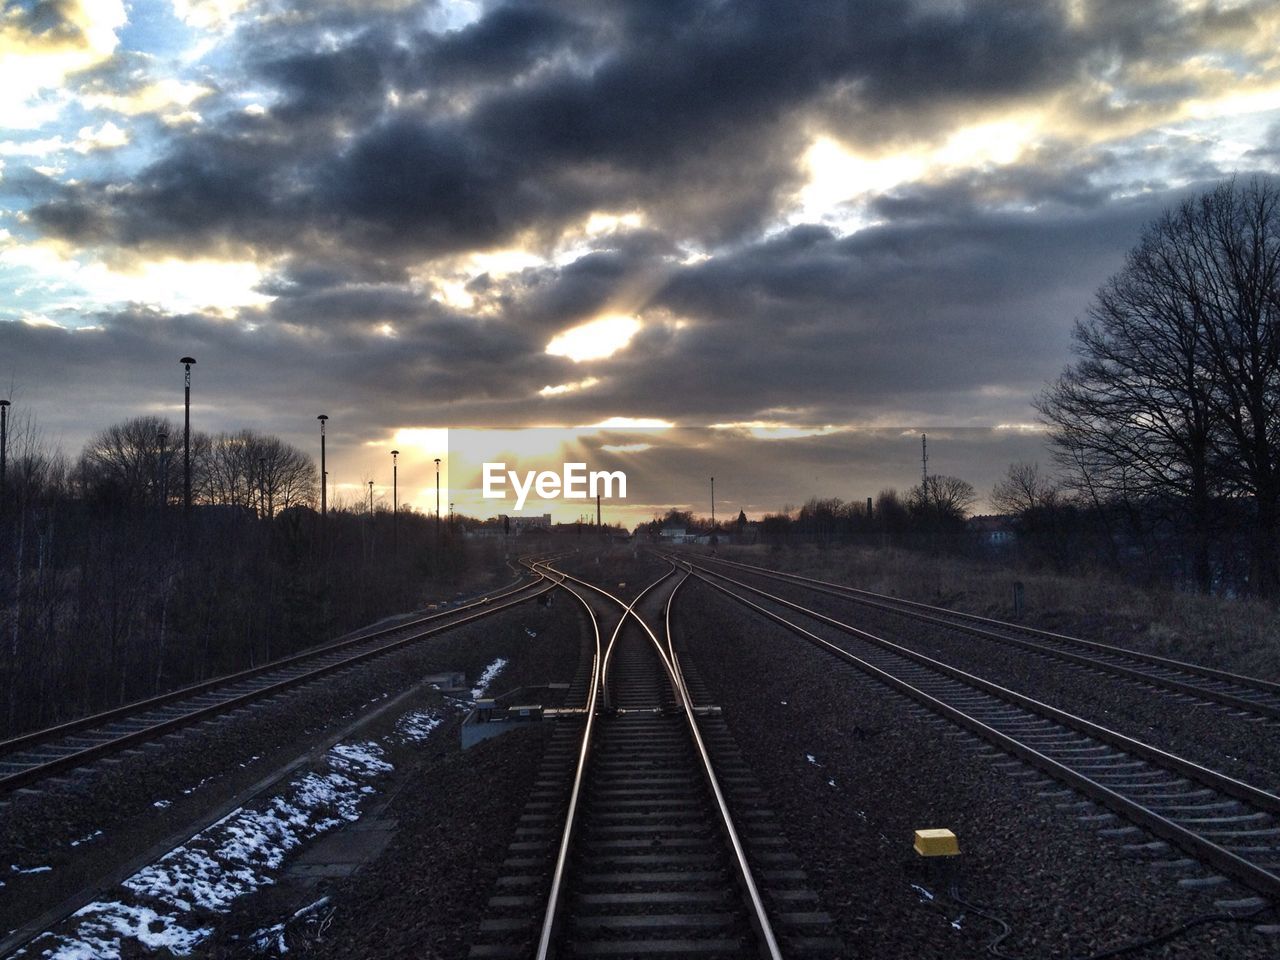 Railroad tracks during sunset